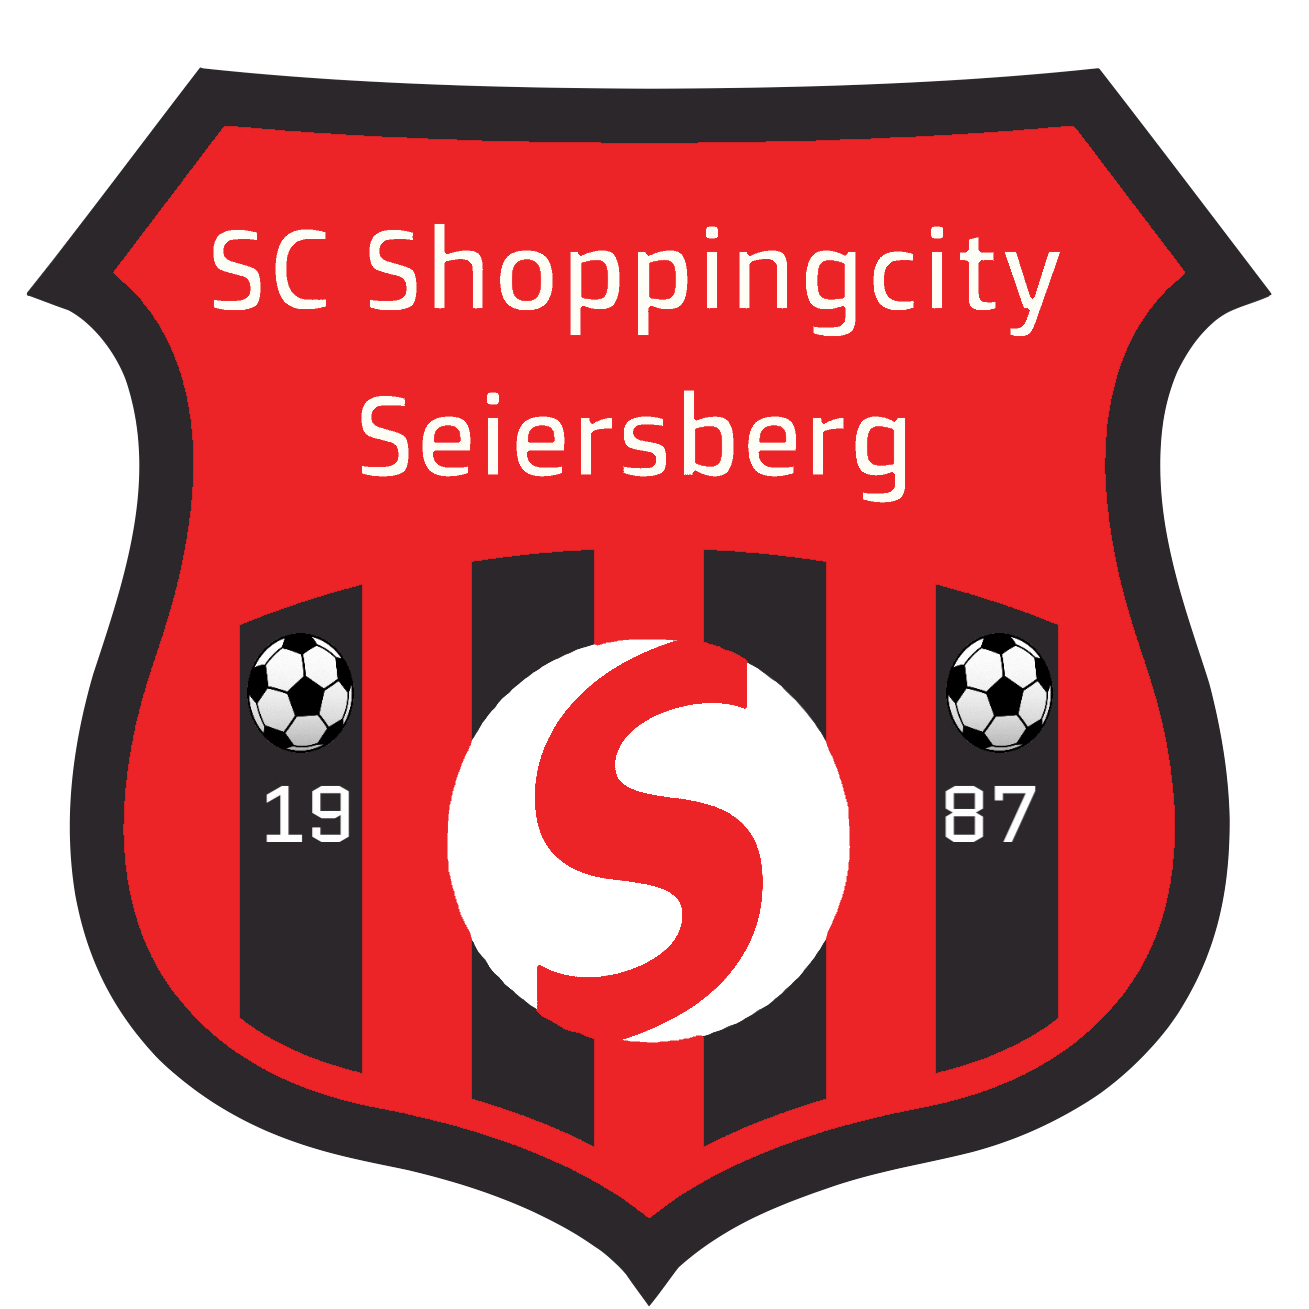 SC Seiersberg